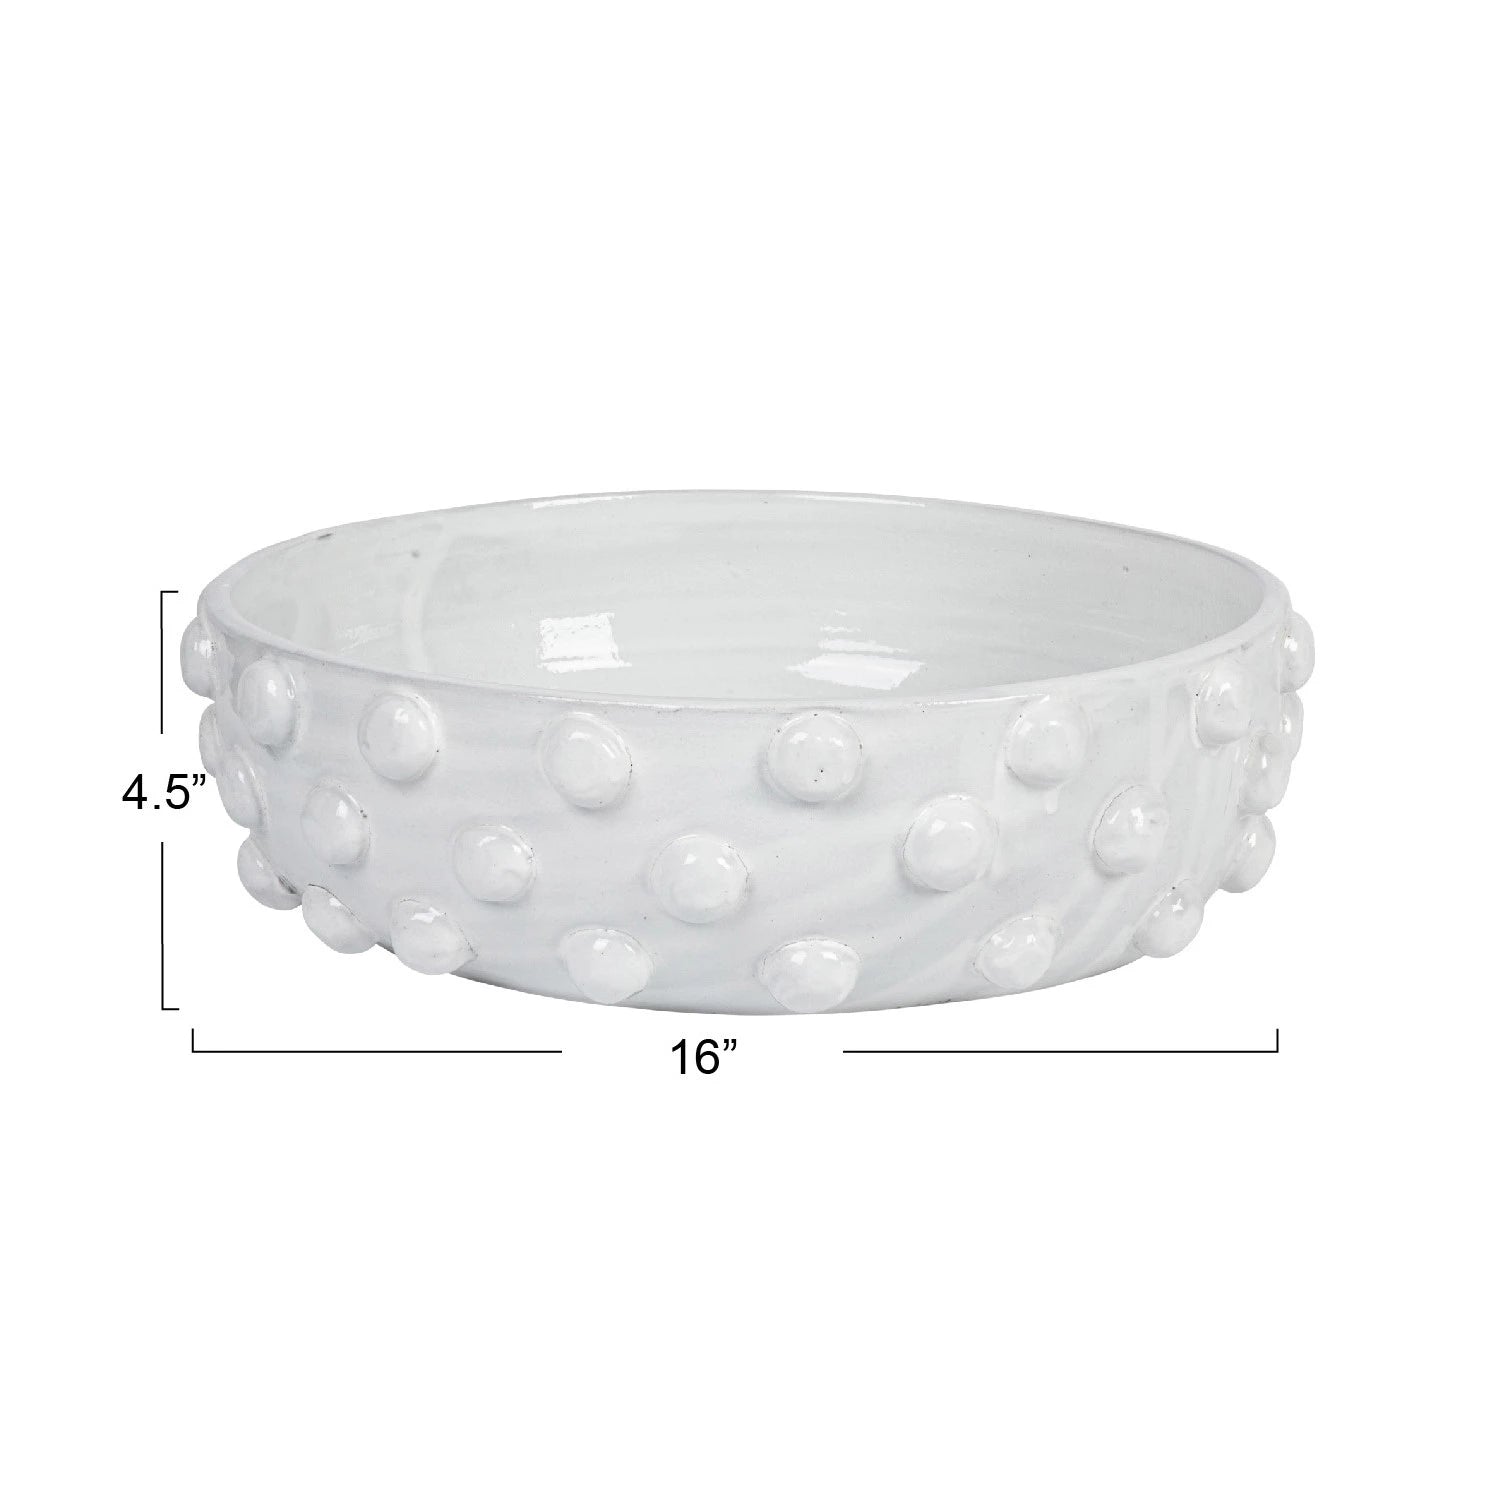 Decorative Bowl w/ Raised Dots, White